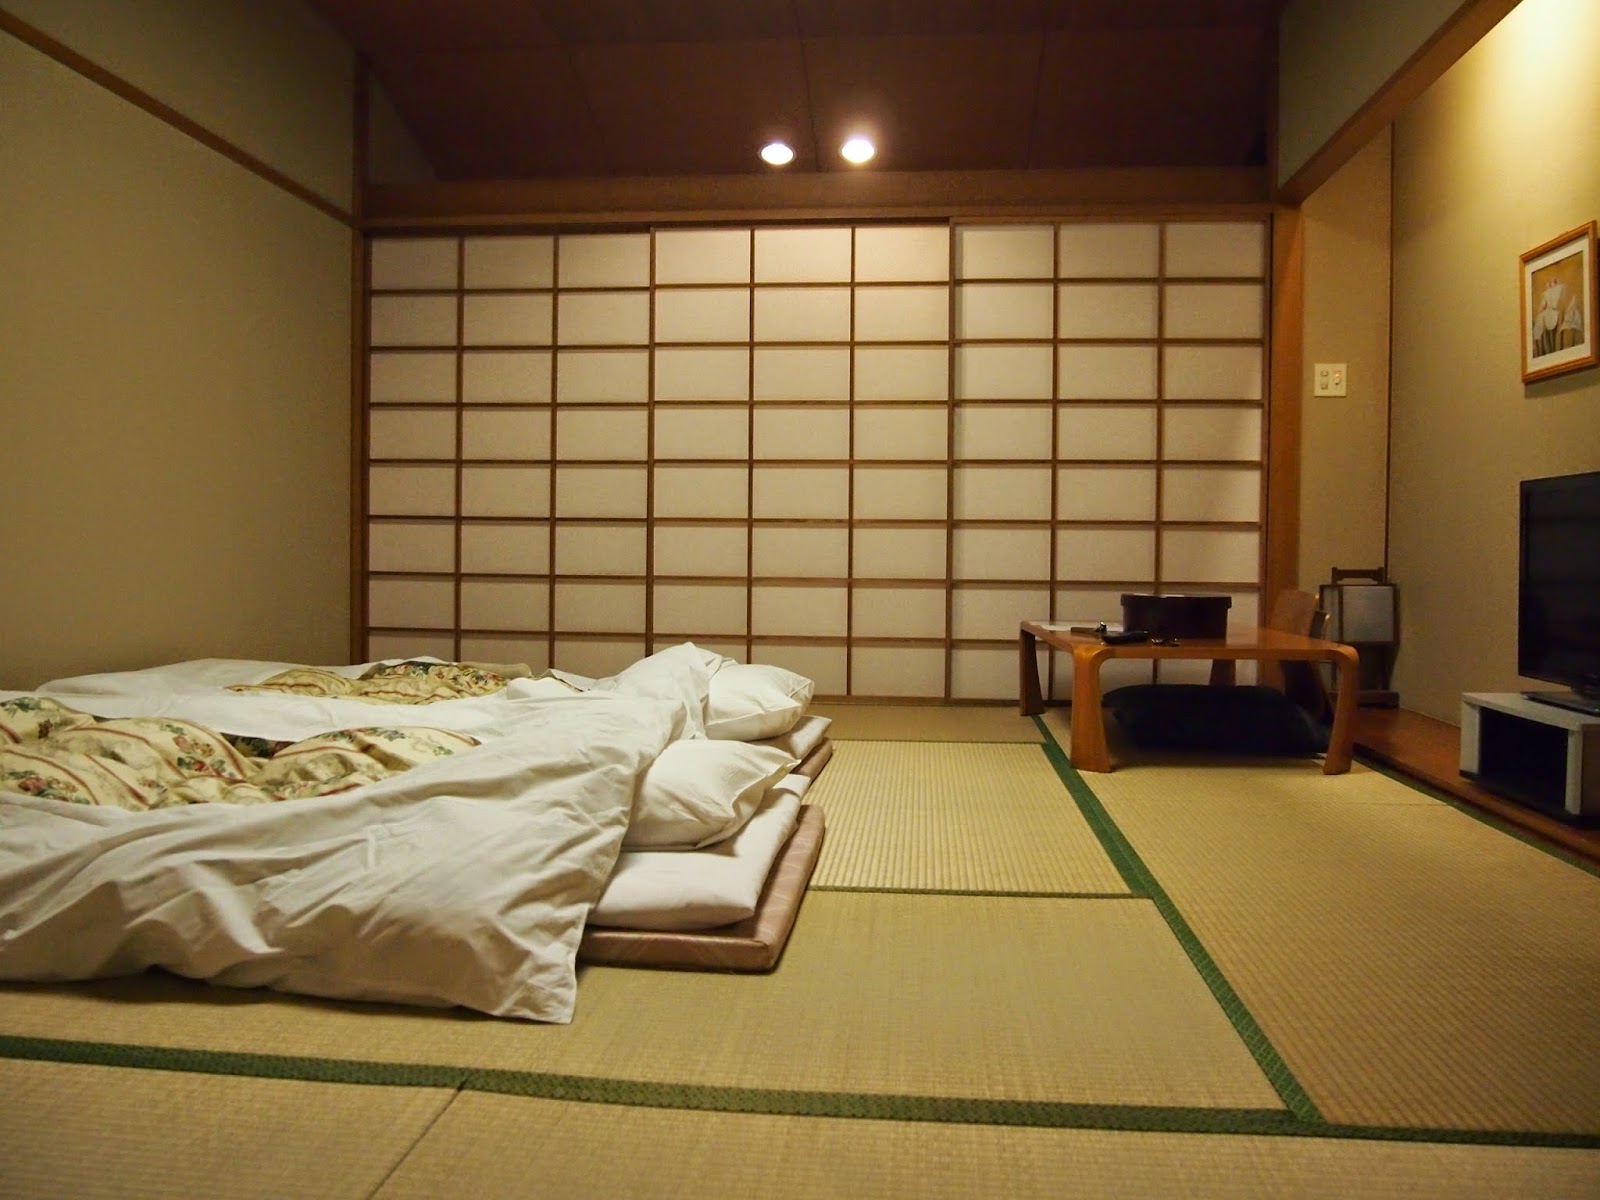 Japanese-style bedroom interior photo